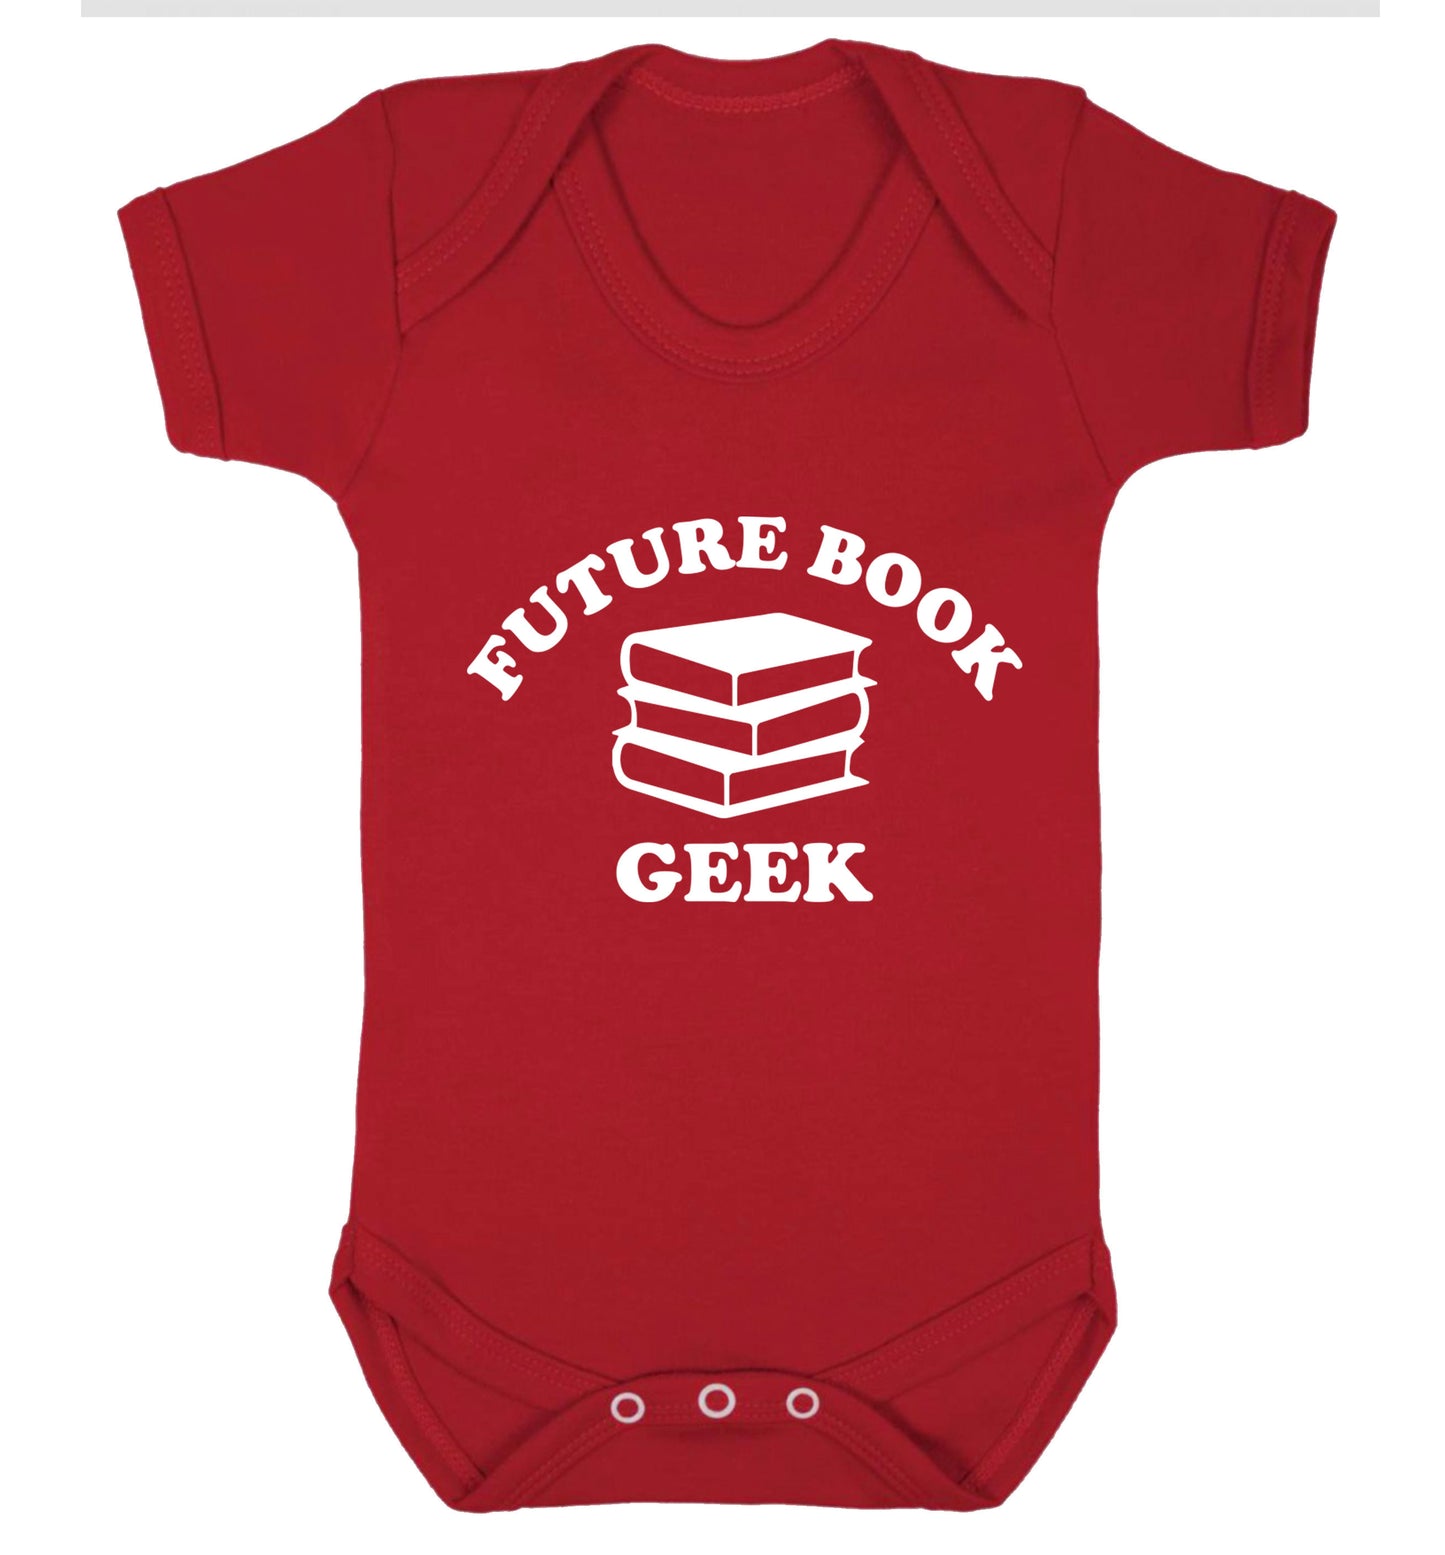 Future book geek Baby Vest red 18-24 months